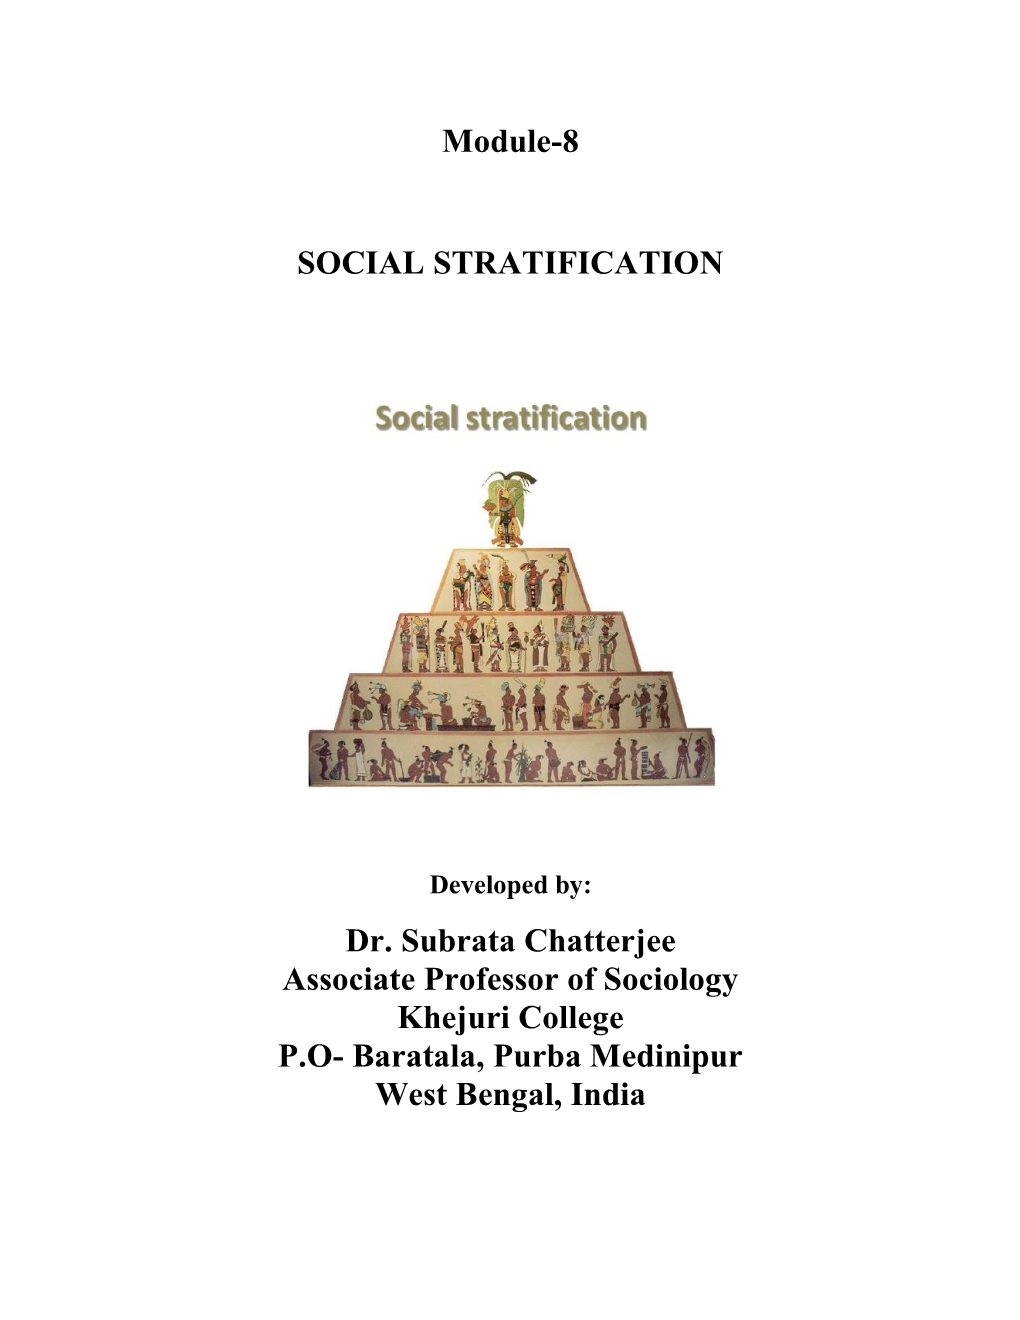 Module-8 SOCIAL STRATIFICATION Dr. Subrata Chatterjee Associate Professor of Sociology Khejuri College P.O- Baratala, Purba Medi